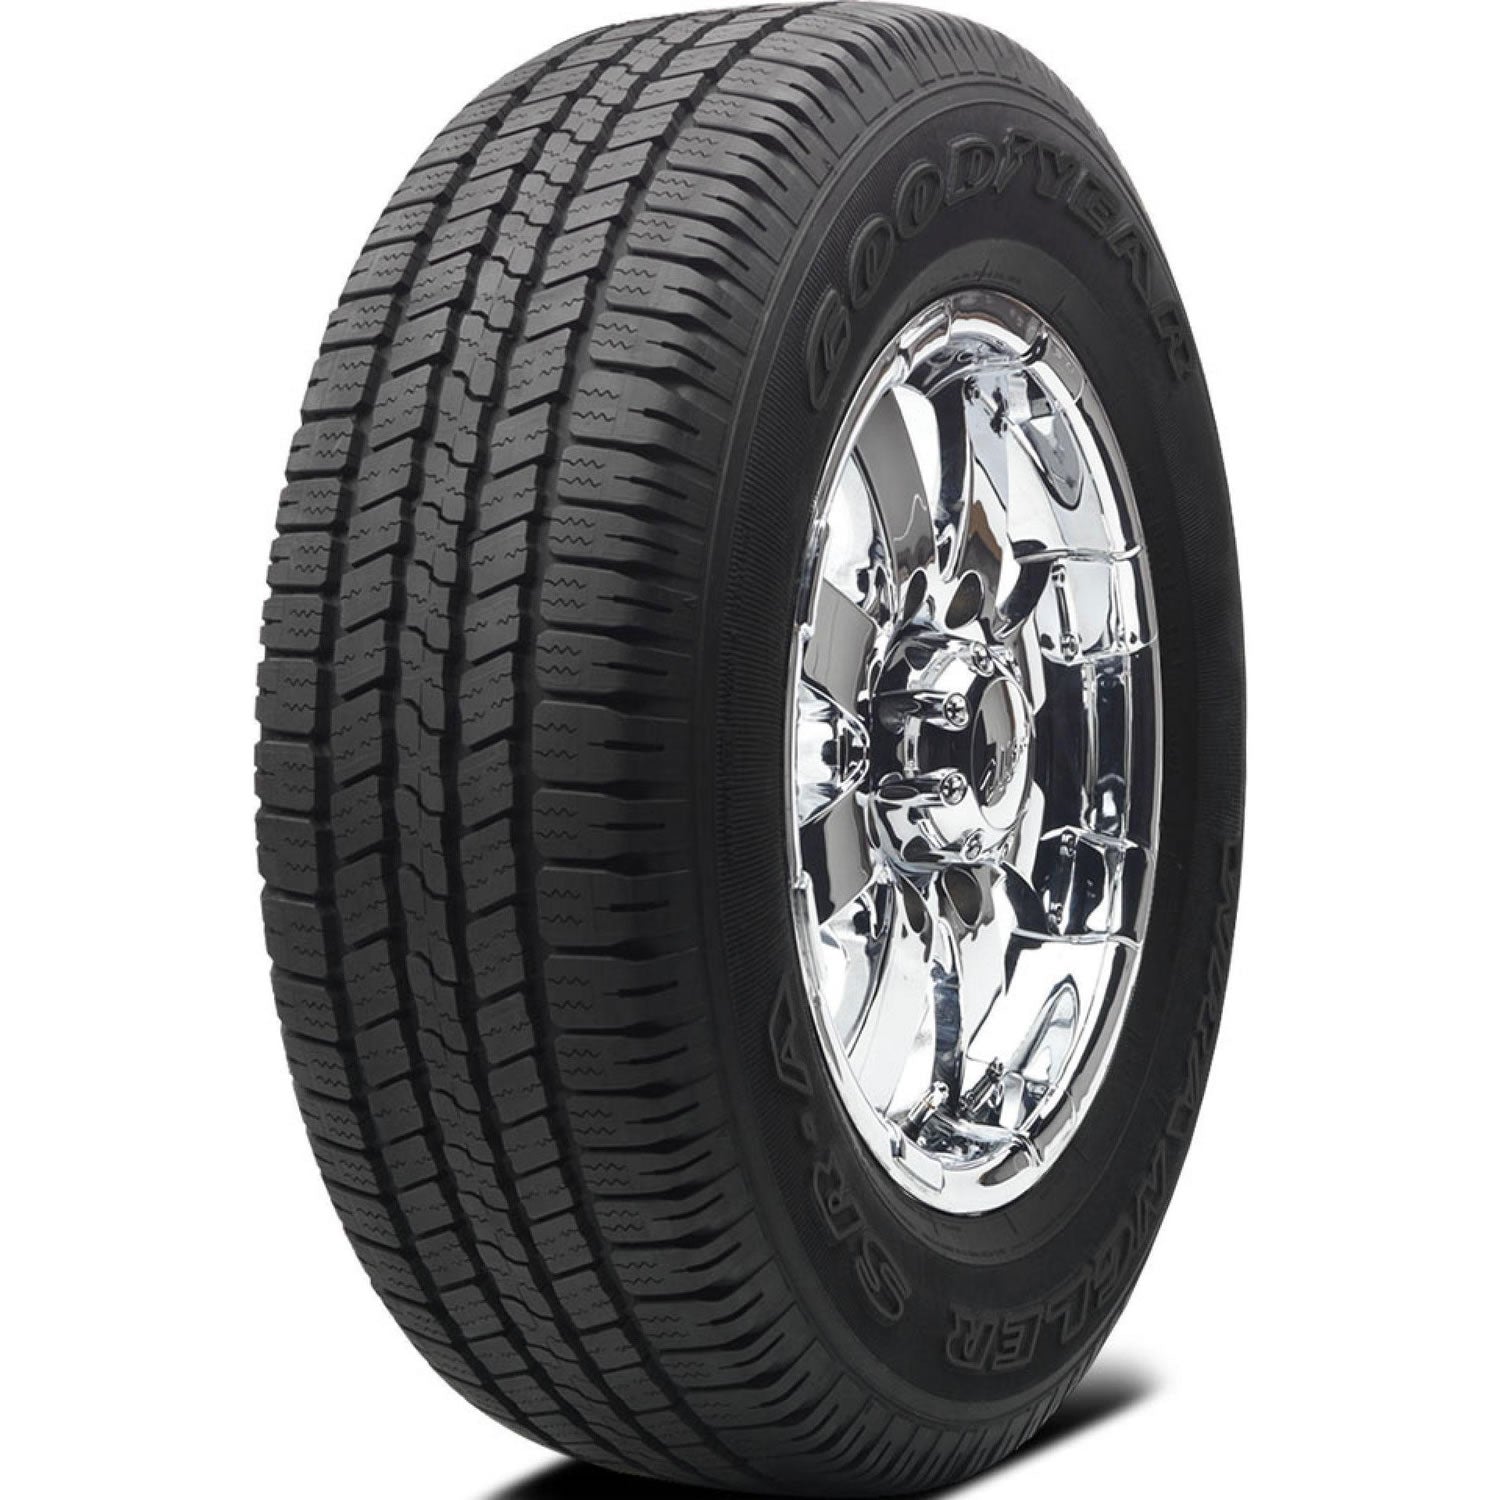 GOODYEAR WRANGLER SR-A P265/65R18 (31.5X10.7R 18) Tires